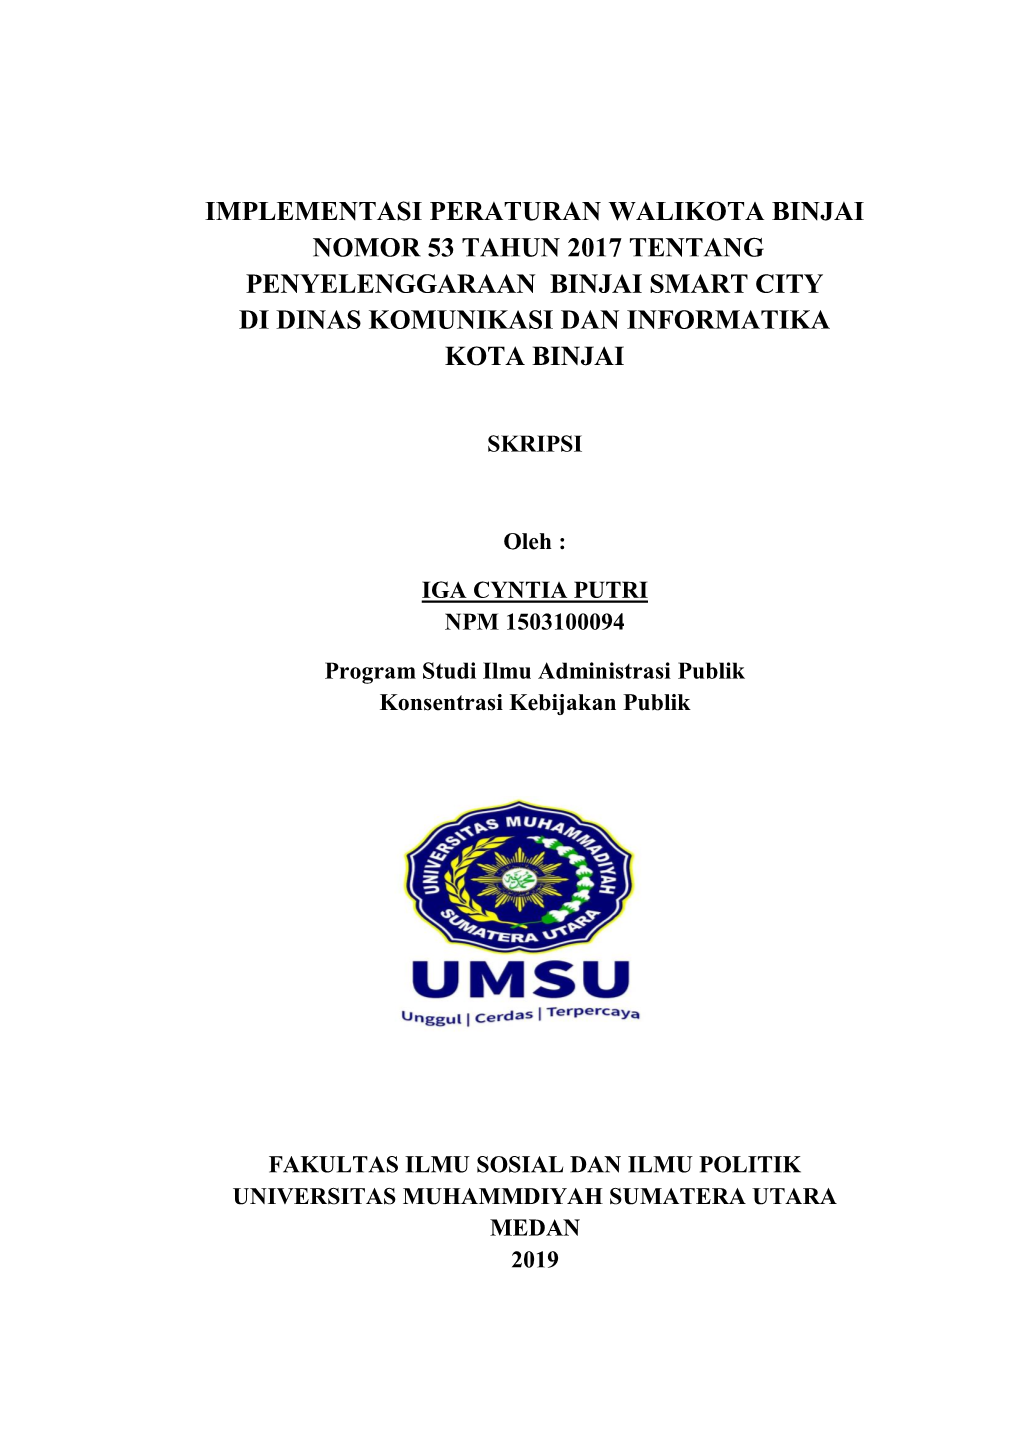 Implementasi Peraturan Walikota Binjai Nomor 53 Tahun 2017 Tentang Penyelenggaraan Binjai Smart City Di Dinas Komunikasi Dan Informatika Kota Binjai